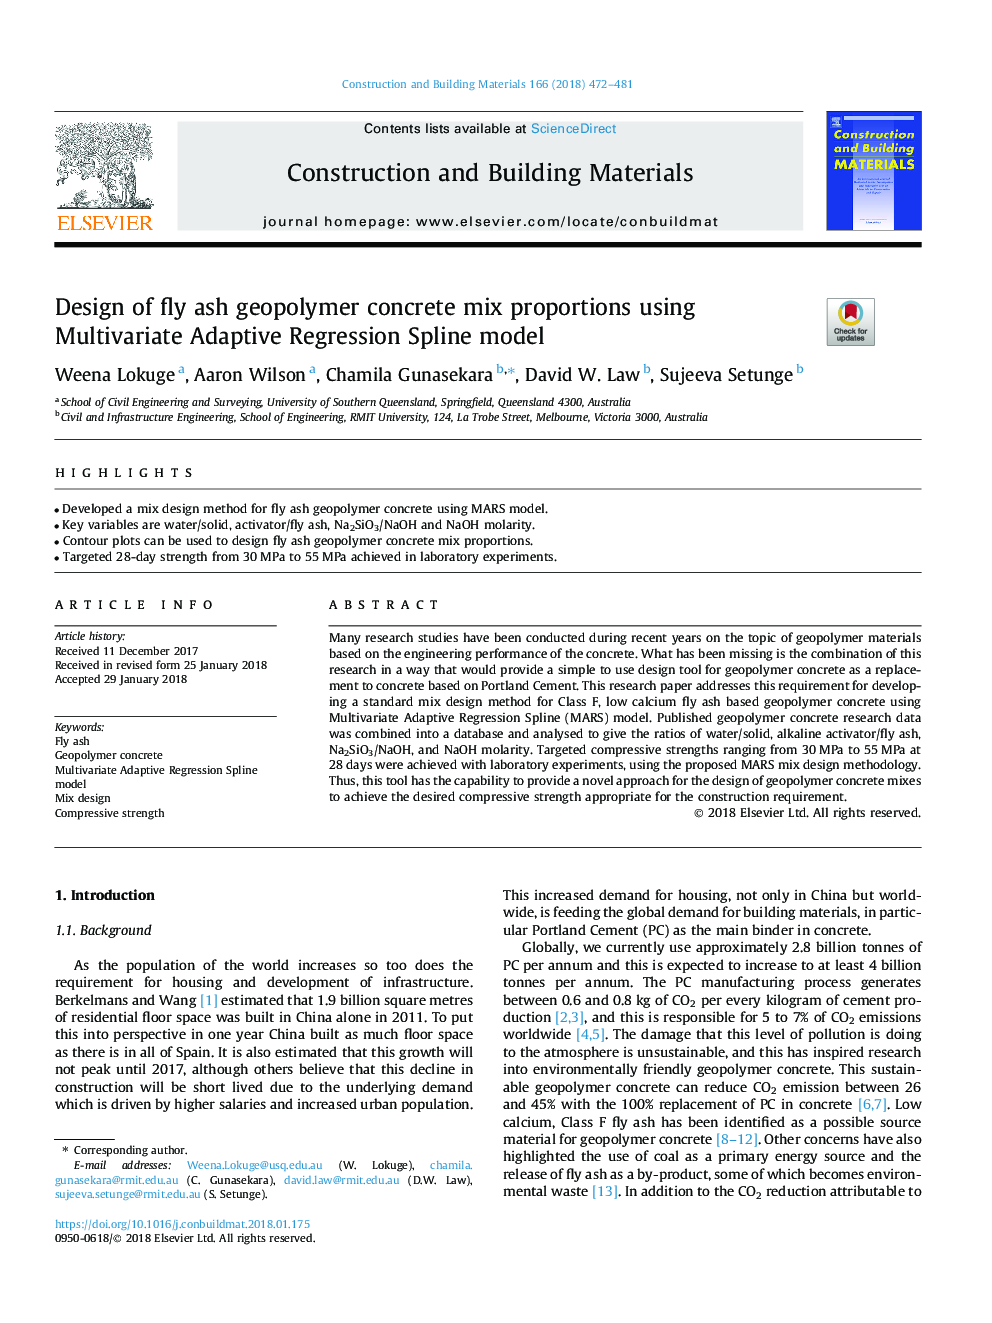 Design of fly ash geopolymer concrete mix proportions using Multivariate Adaptive Regression Spline model